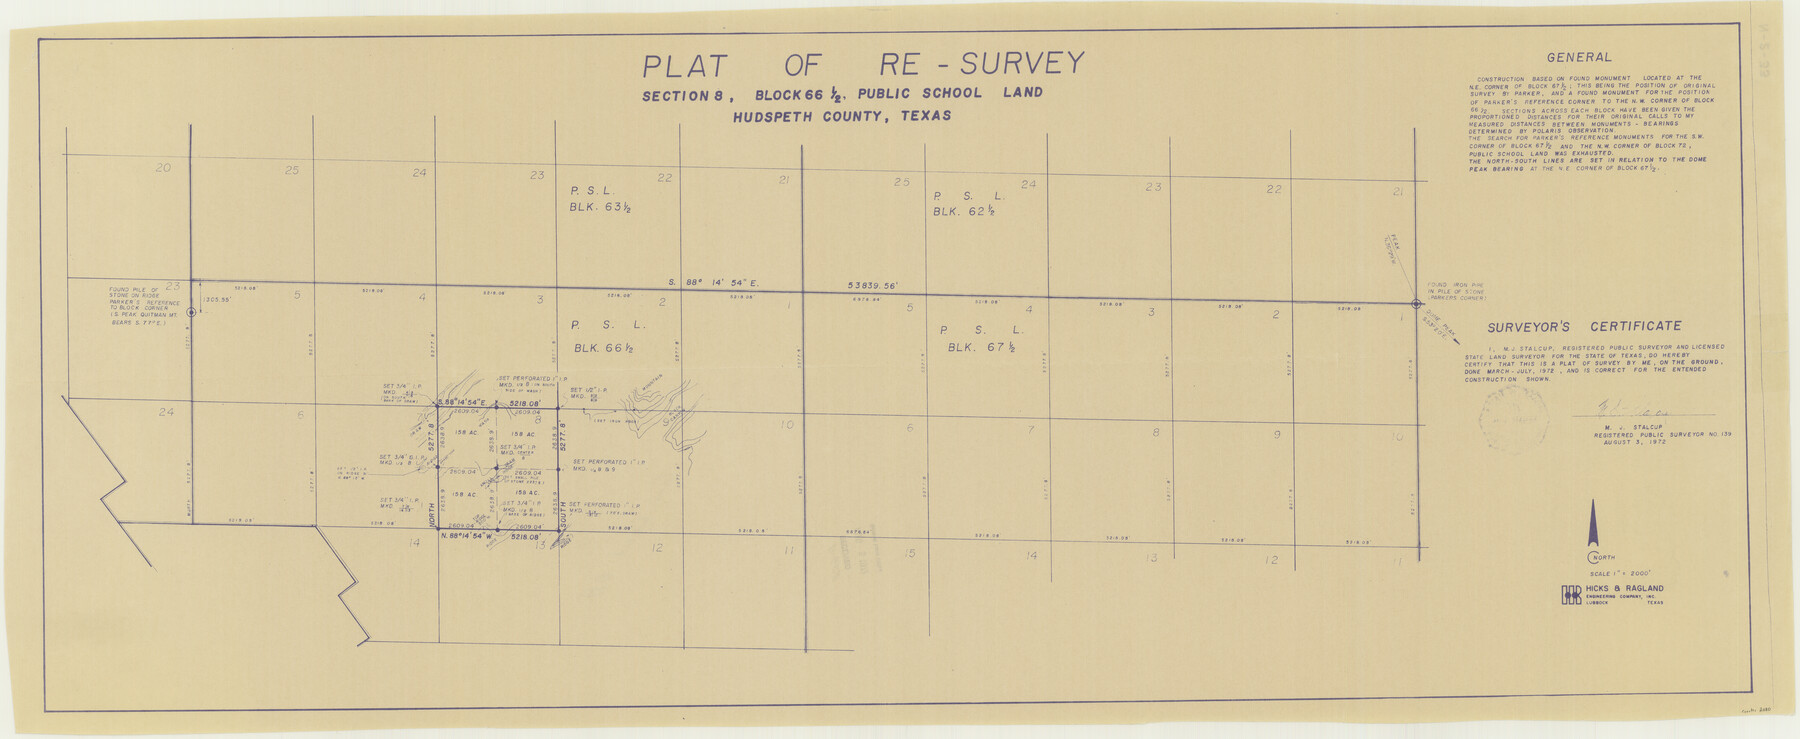 2080, Plat of Re-survey Section 8, Block 66 1/2, Public School Land, General Map Collection